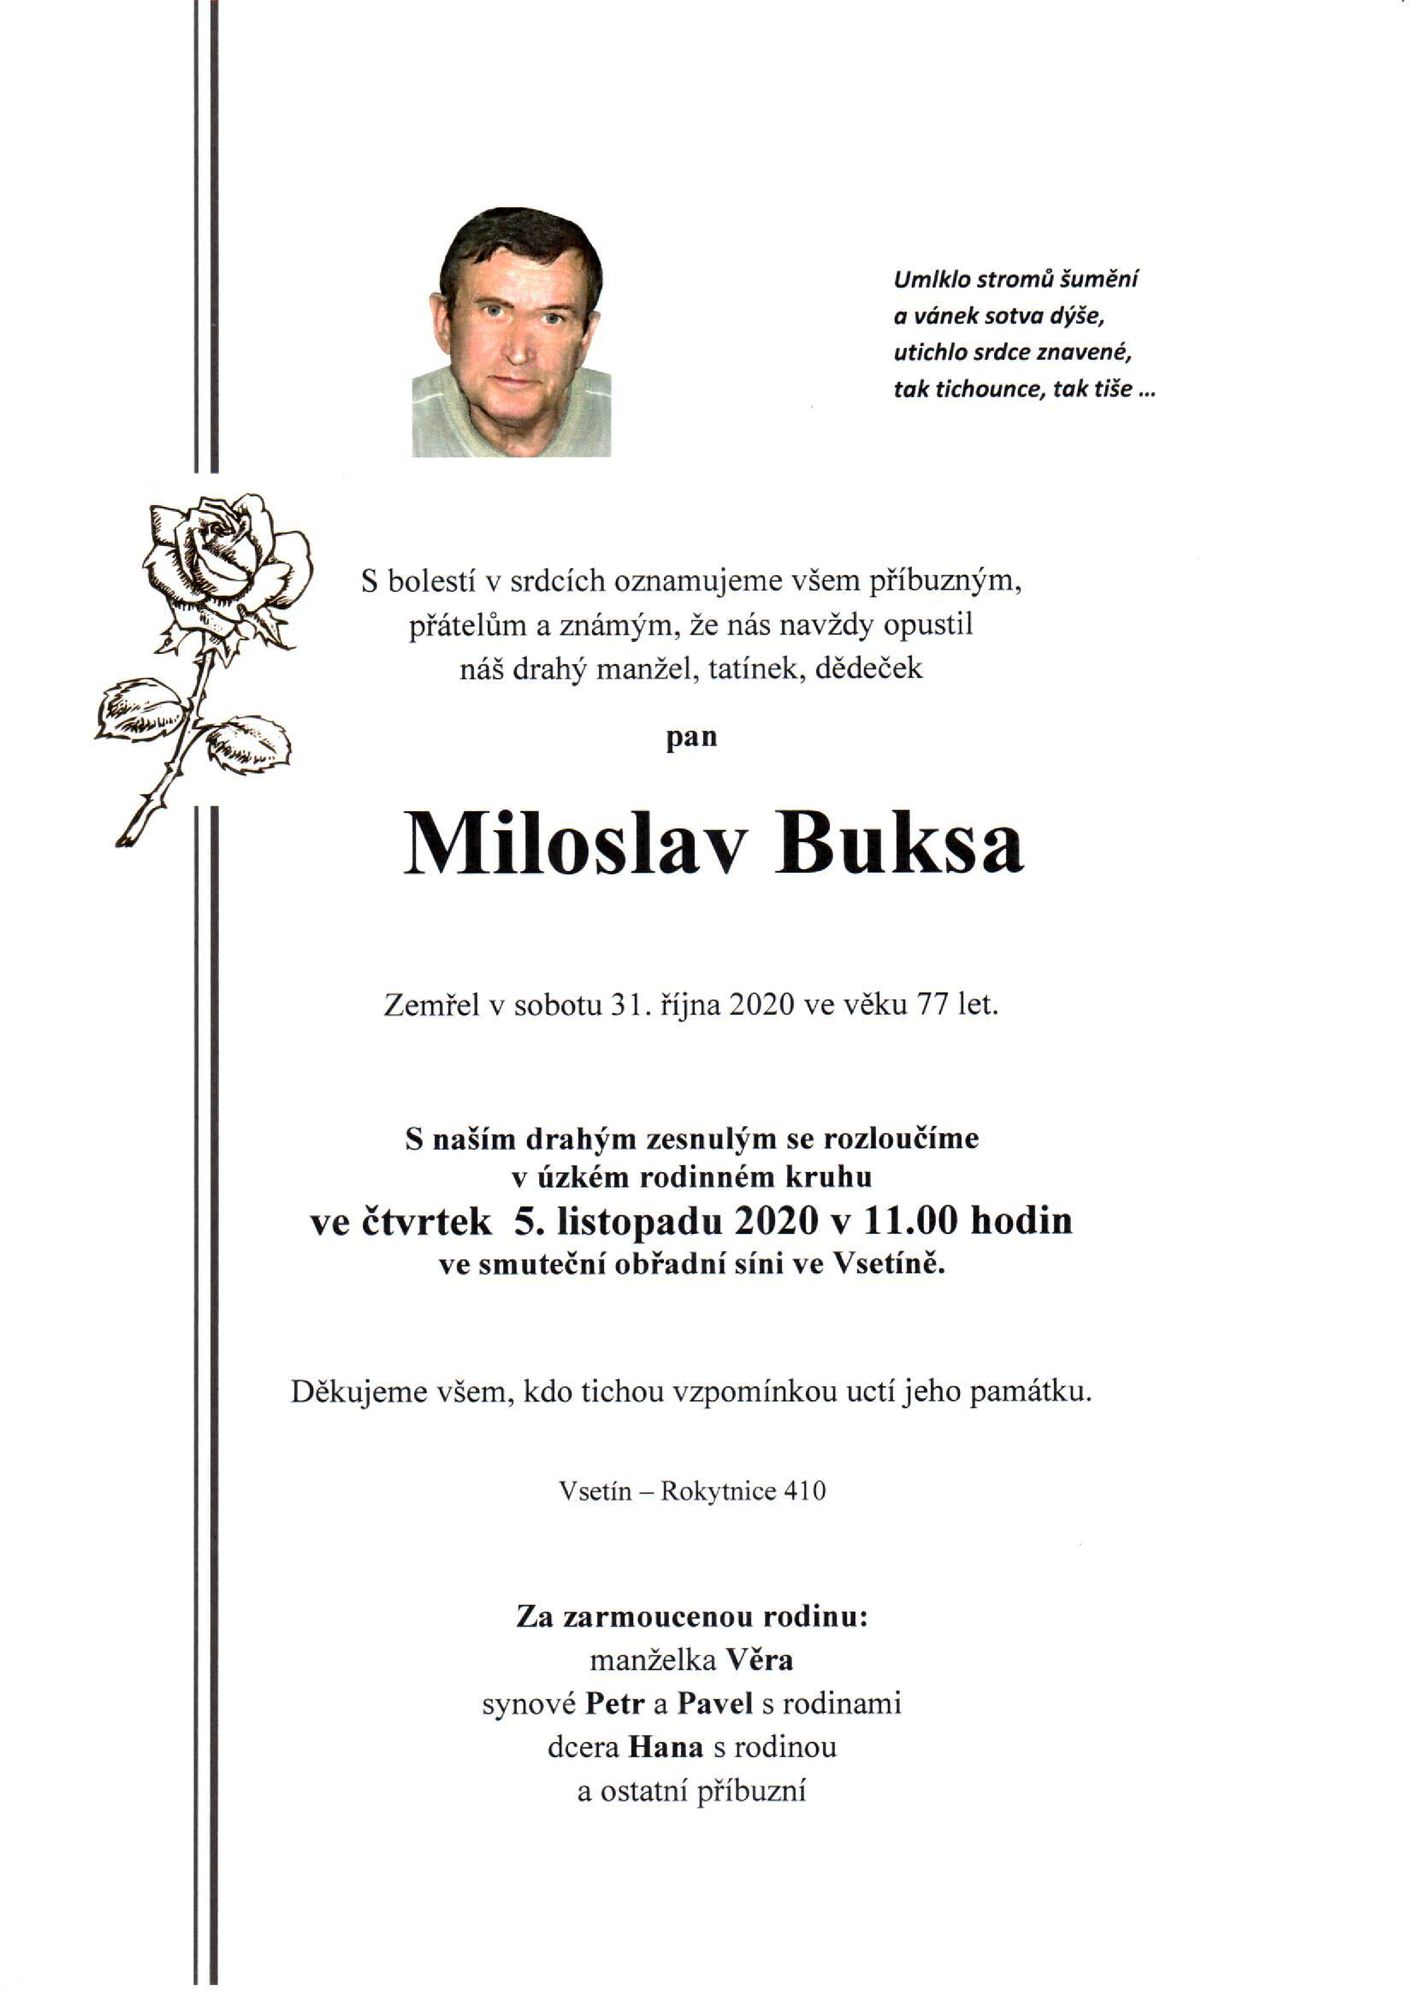 Miloslav Buksa